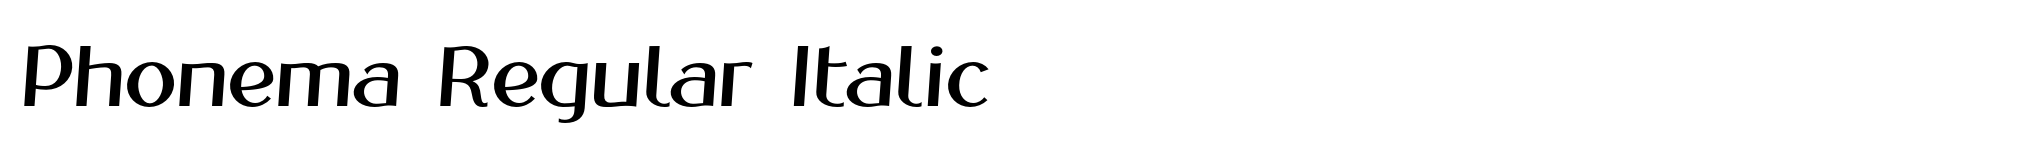 Phonema Regular Italic image